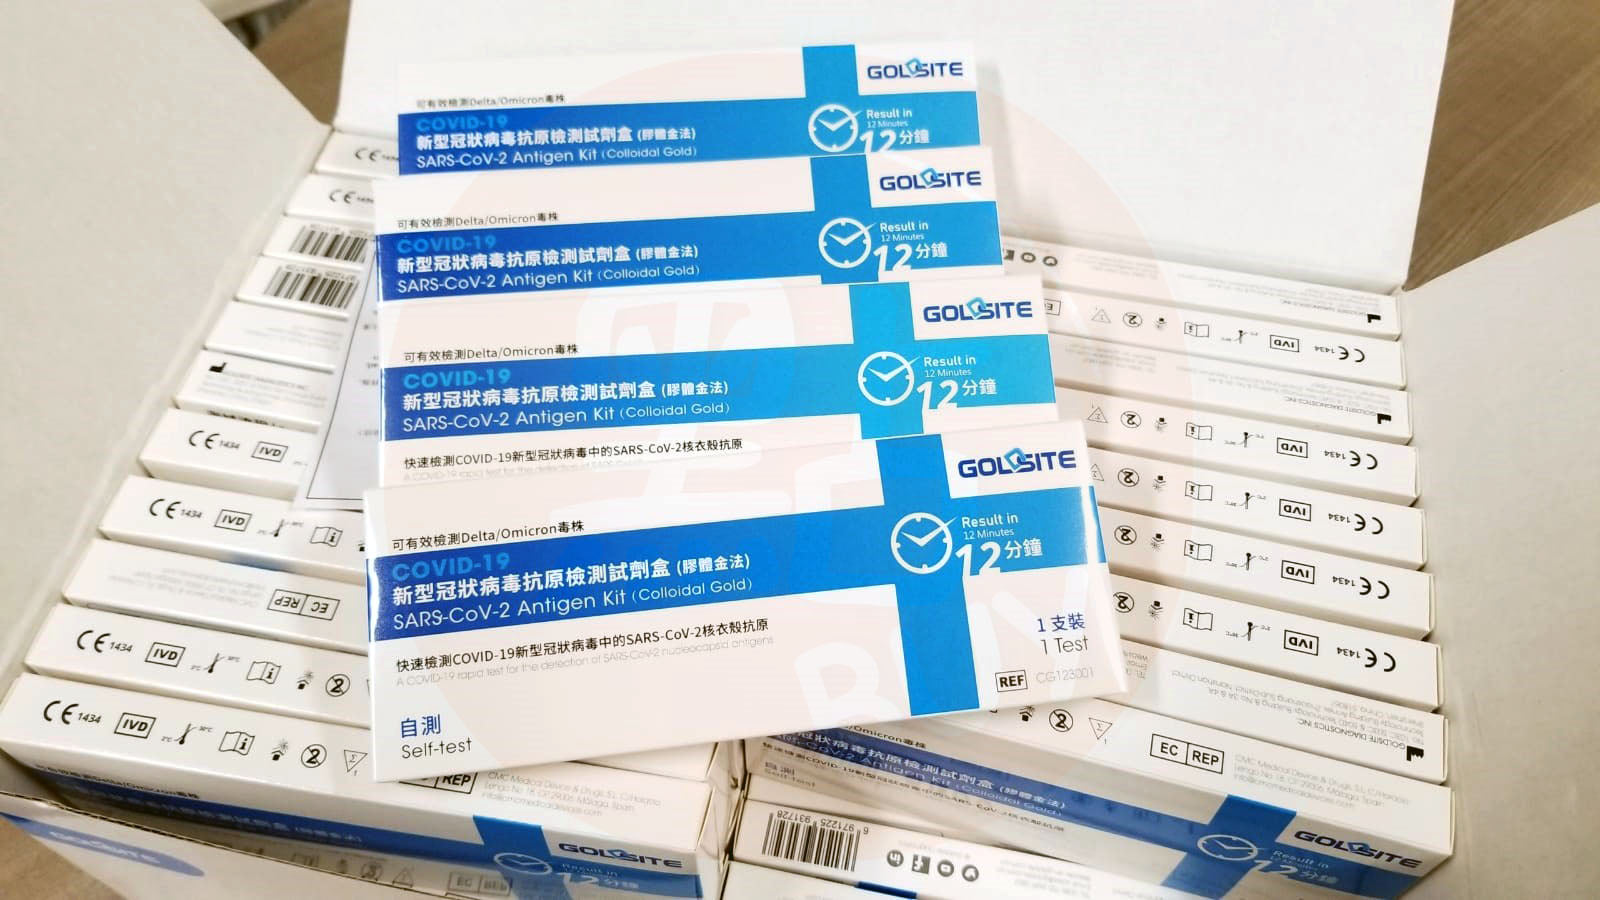 GOLDSITE SARS-CoV Antigen Kit 新冠病毒檢測套裝 hong kong version